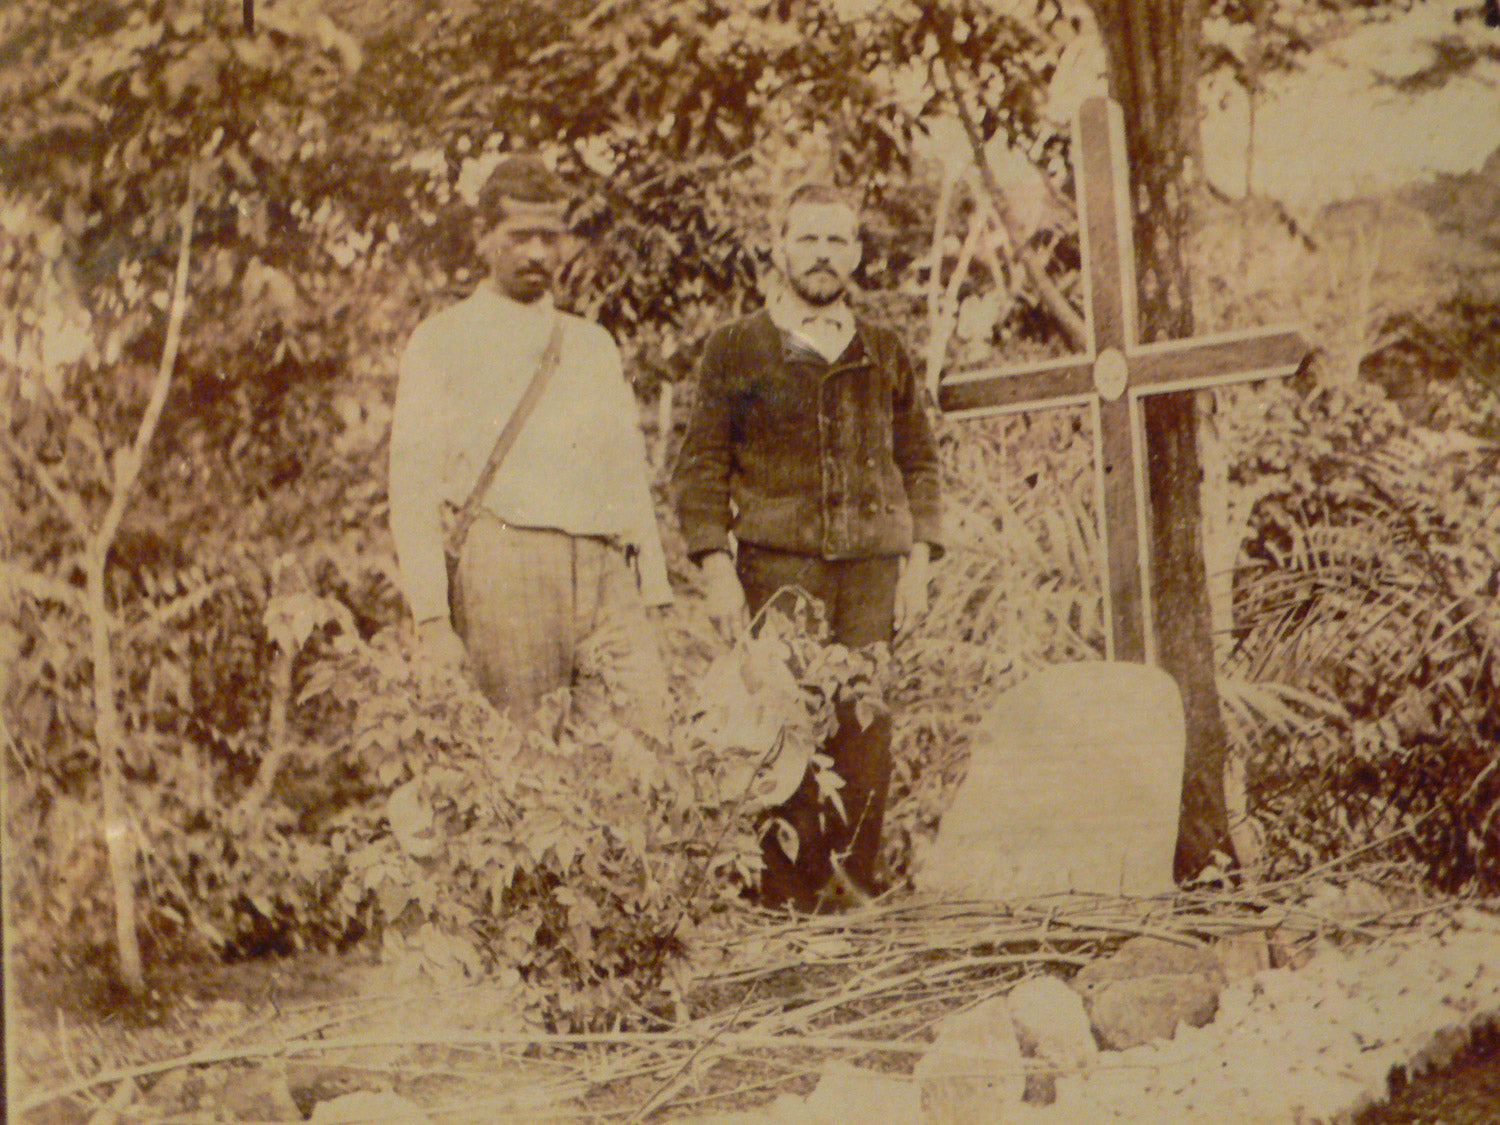 Grave of Paul Gauguin buried on island of Hiva Oa, ATUONA, FRENCH POLYNESIA 